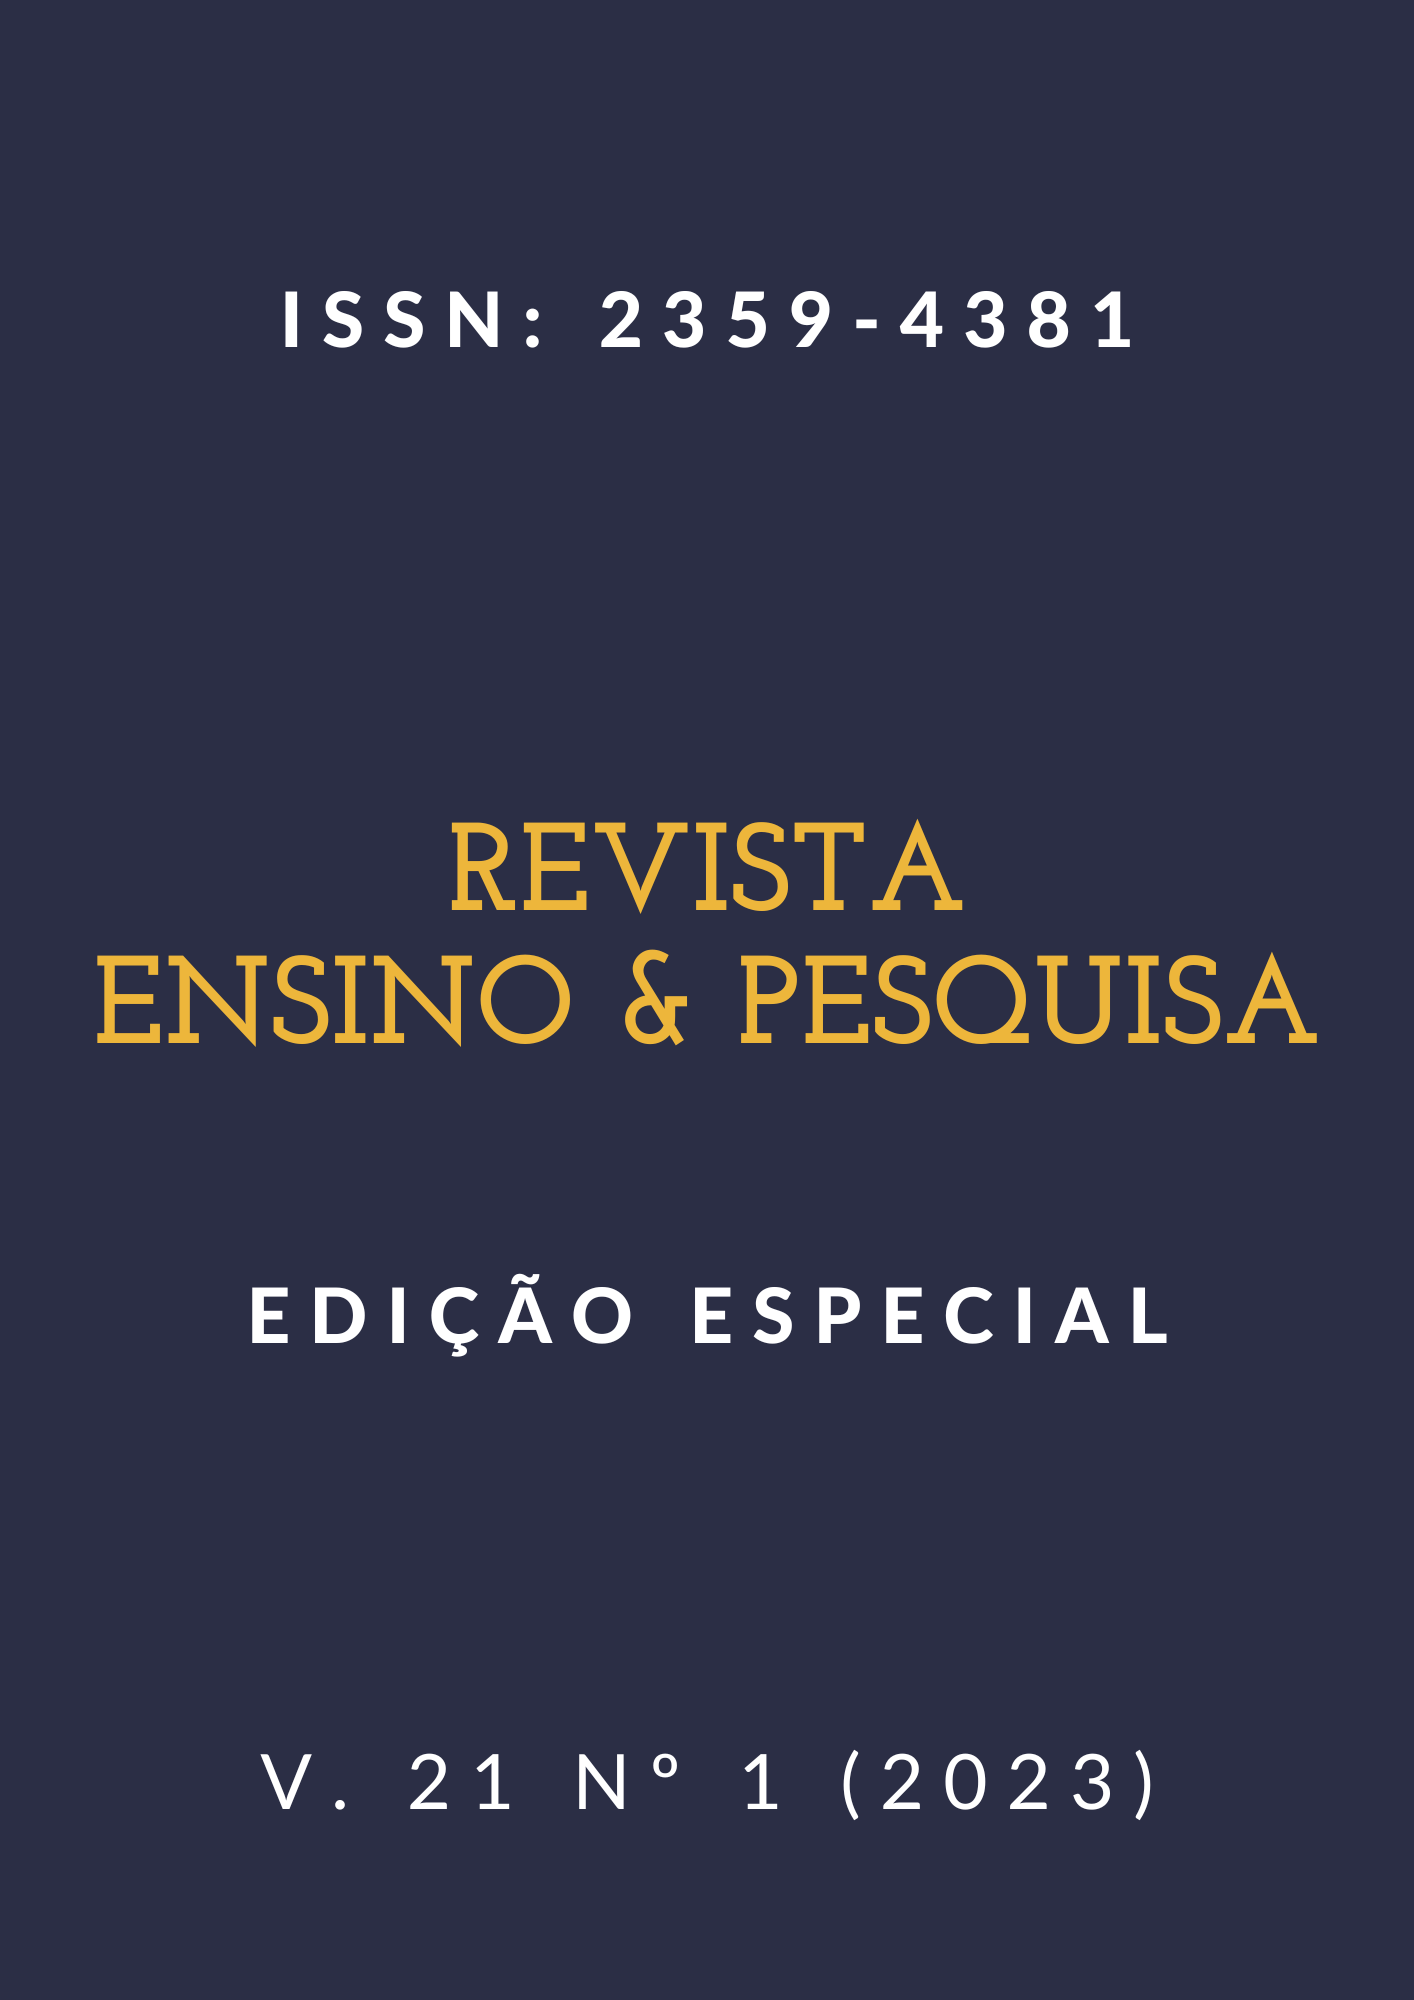 					Ver Vol. 21 Núm. 1 (2023): Ensino & Pesquisa
				